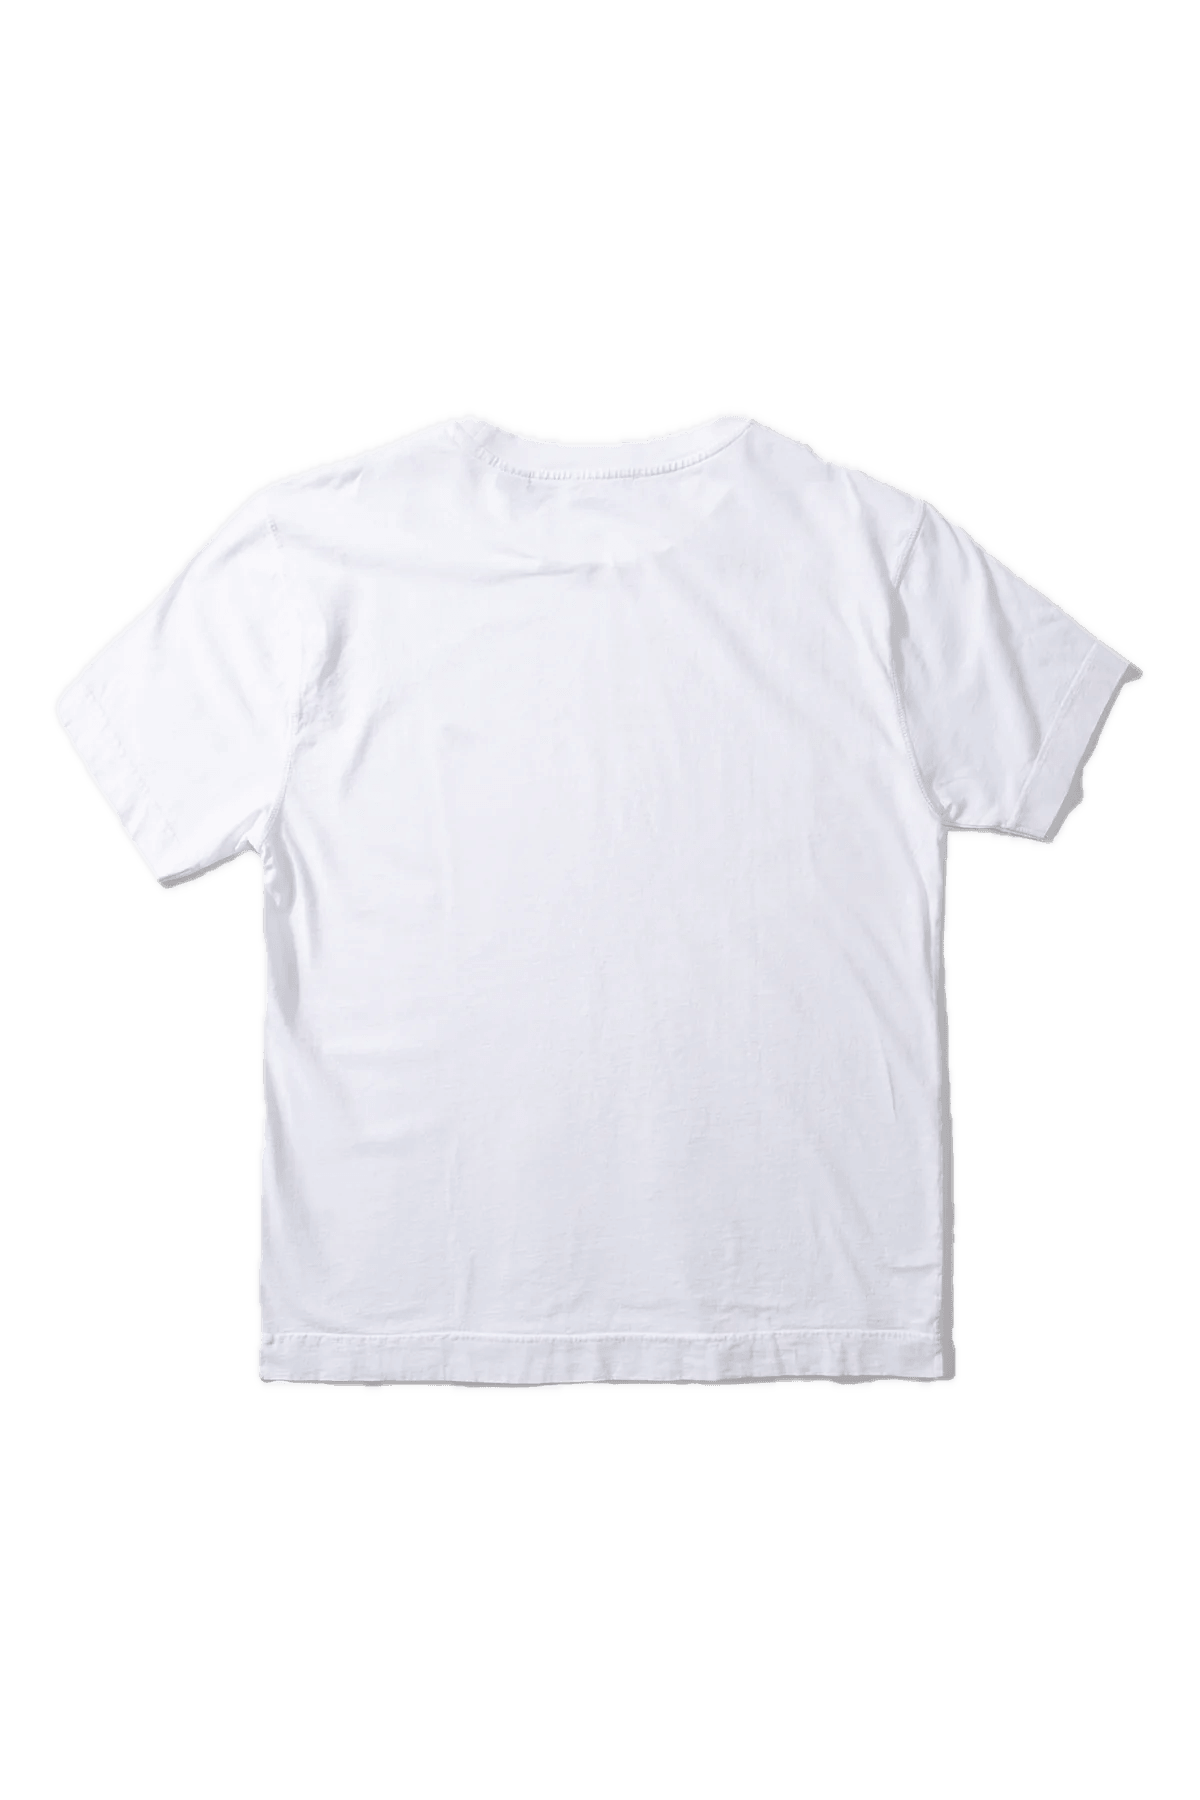 Camiseta Edmmond Studios Duck Patch Plain White - ECRU